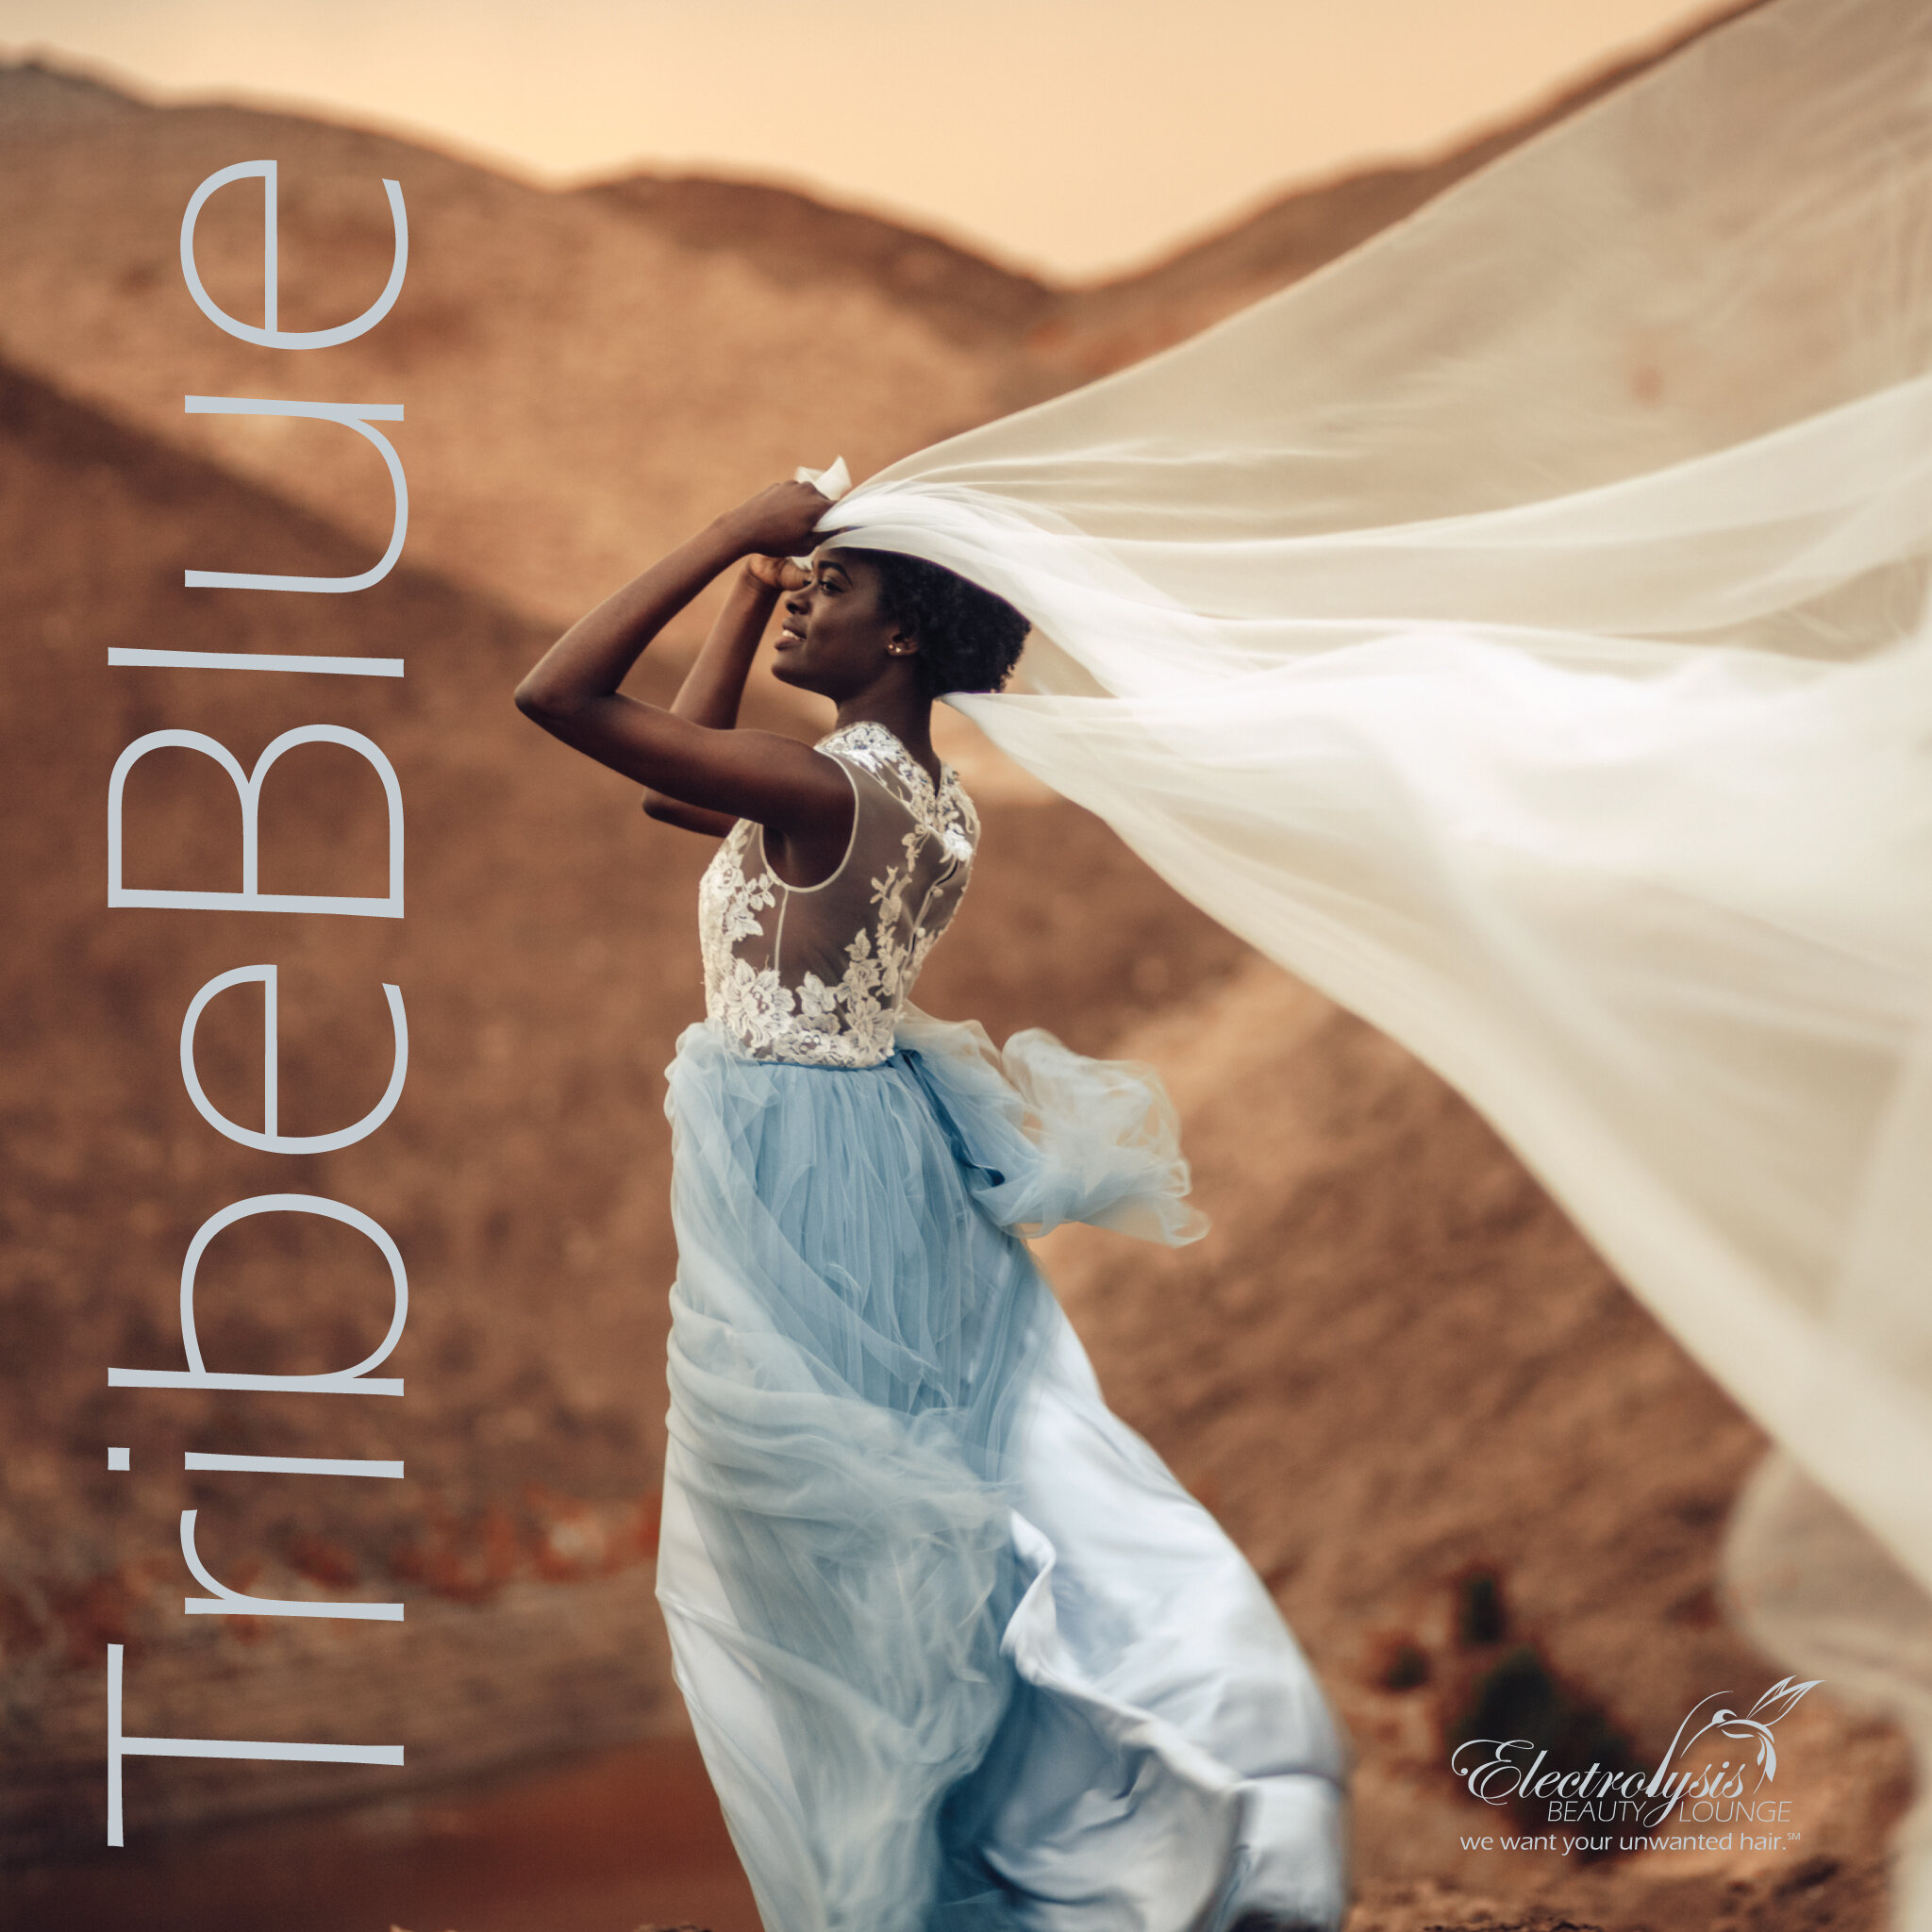 Instagram-tribe-blue-woman-in-wedding-dress-in-desert-.jpg